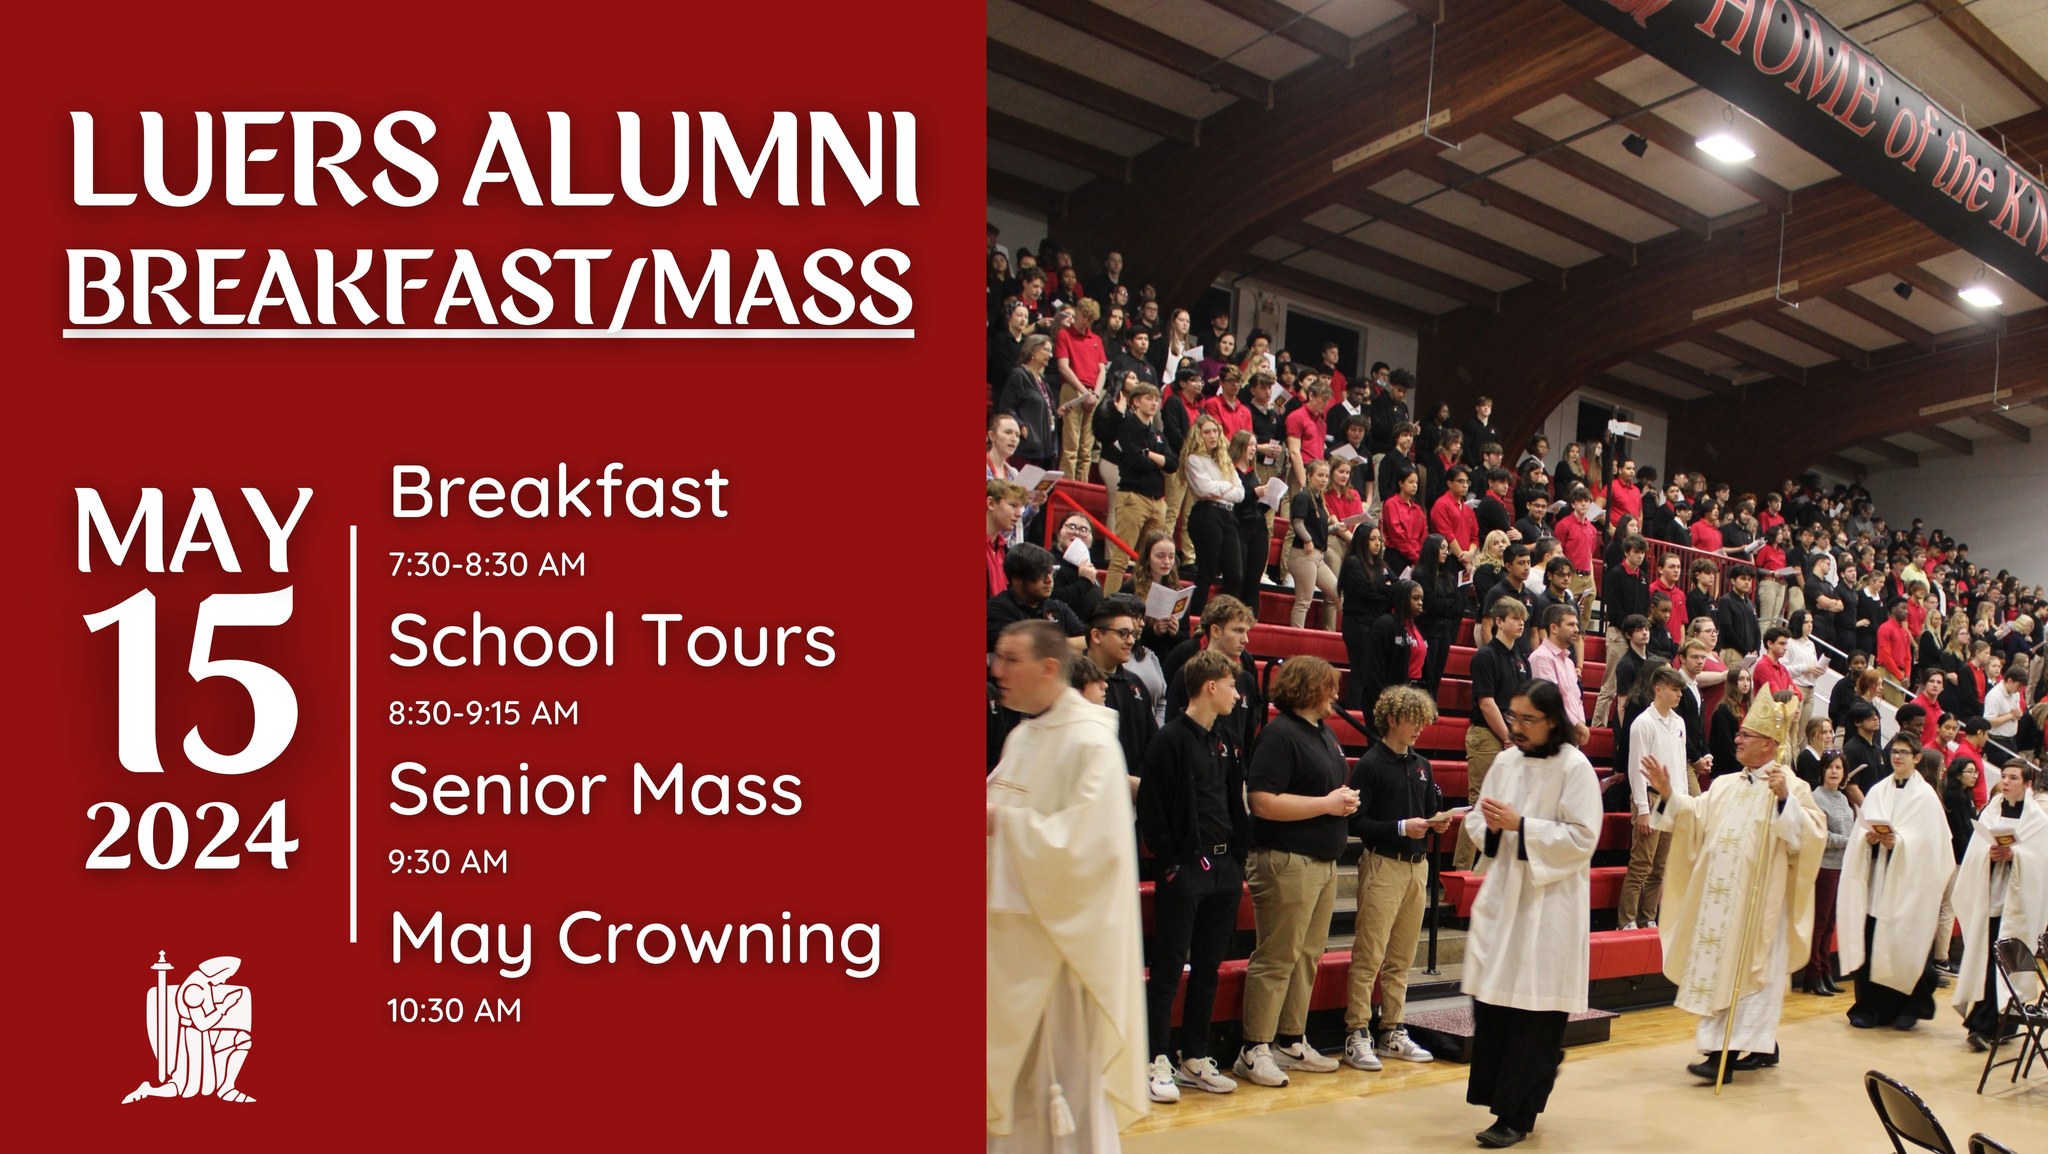 Luers Alumni Breakfast/Mass